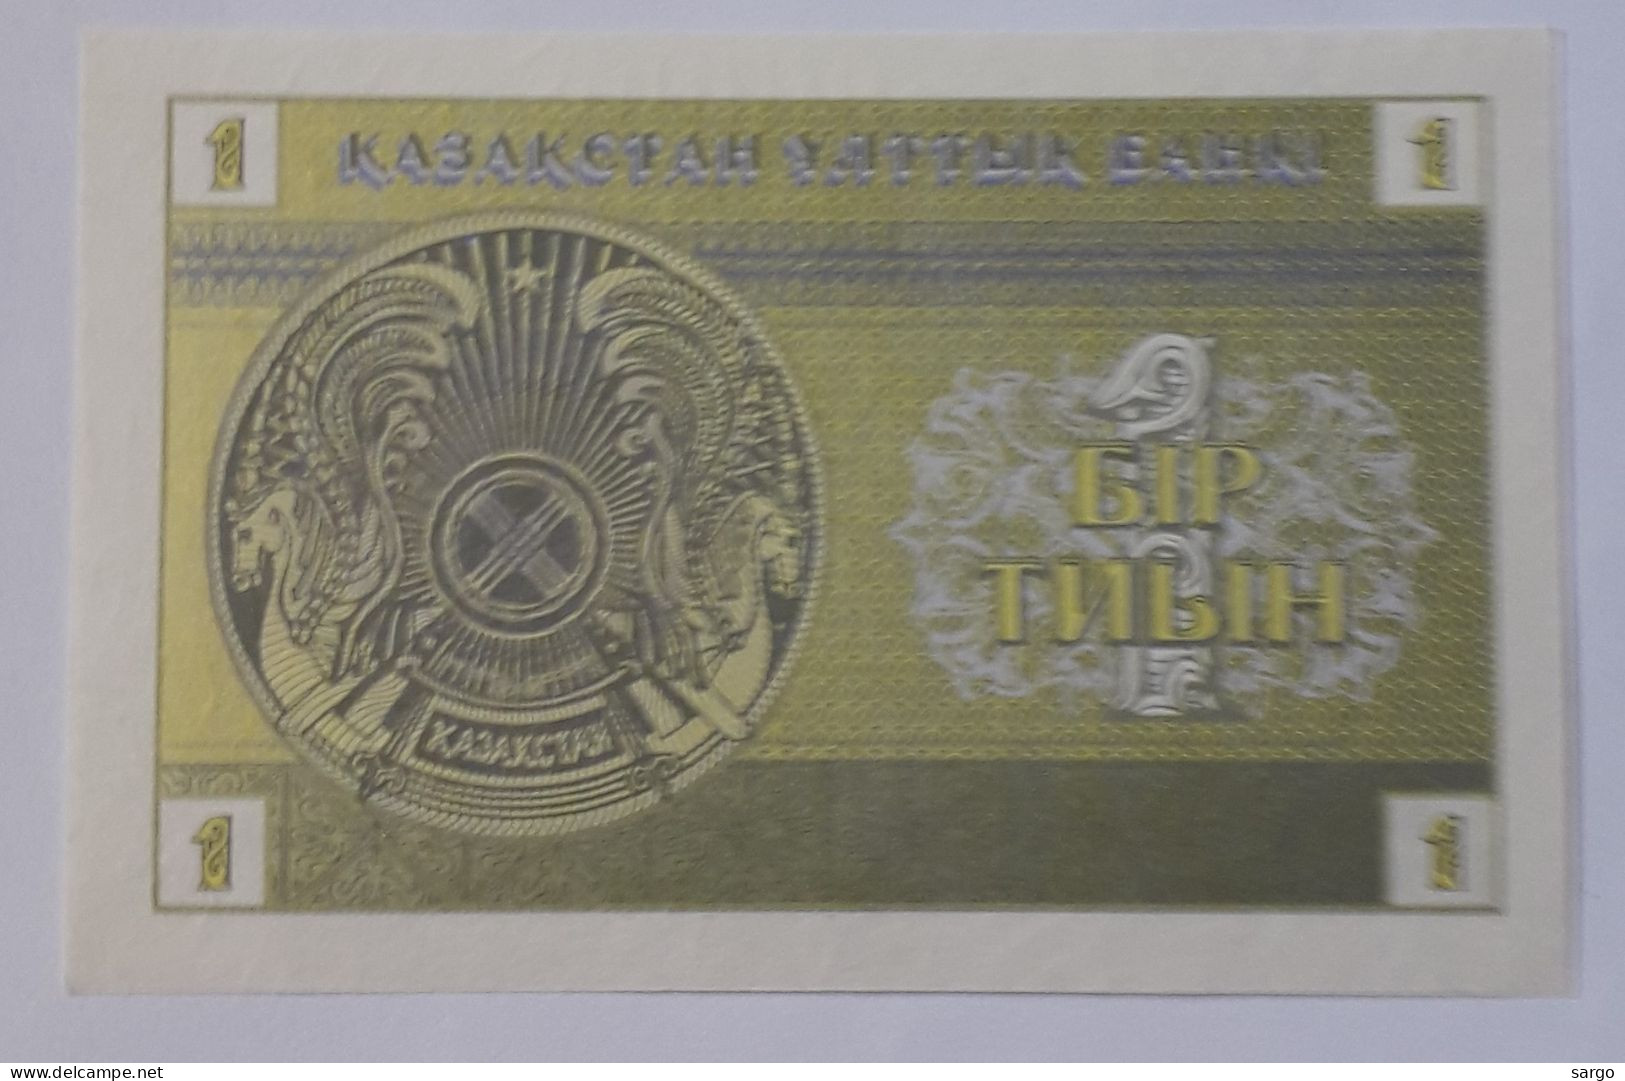 KAZAKHSTAN - 1 TYIN - 1993 - P 1 - UNC - BANKNOTES - PAPER MONEY - CARTAMONETA - - Kazakistan